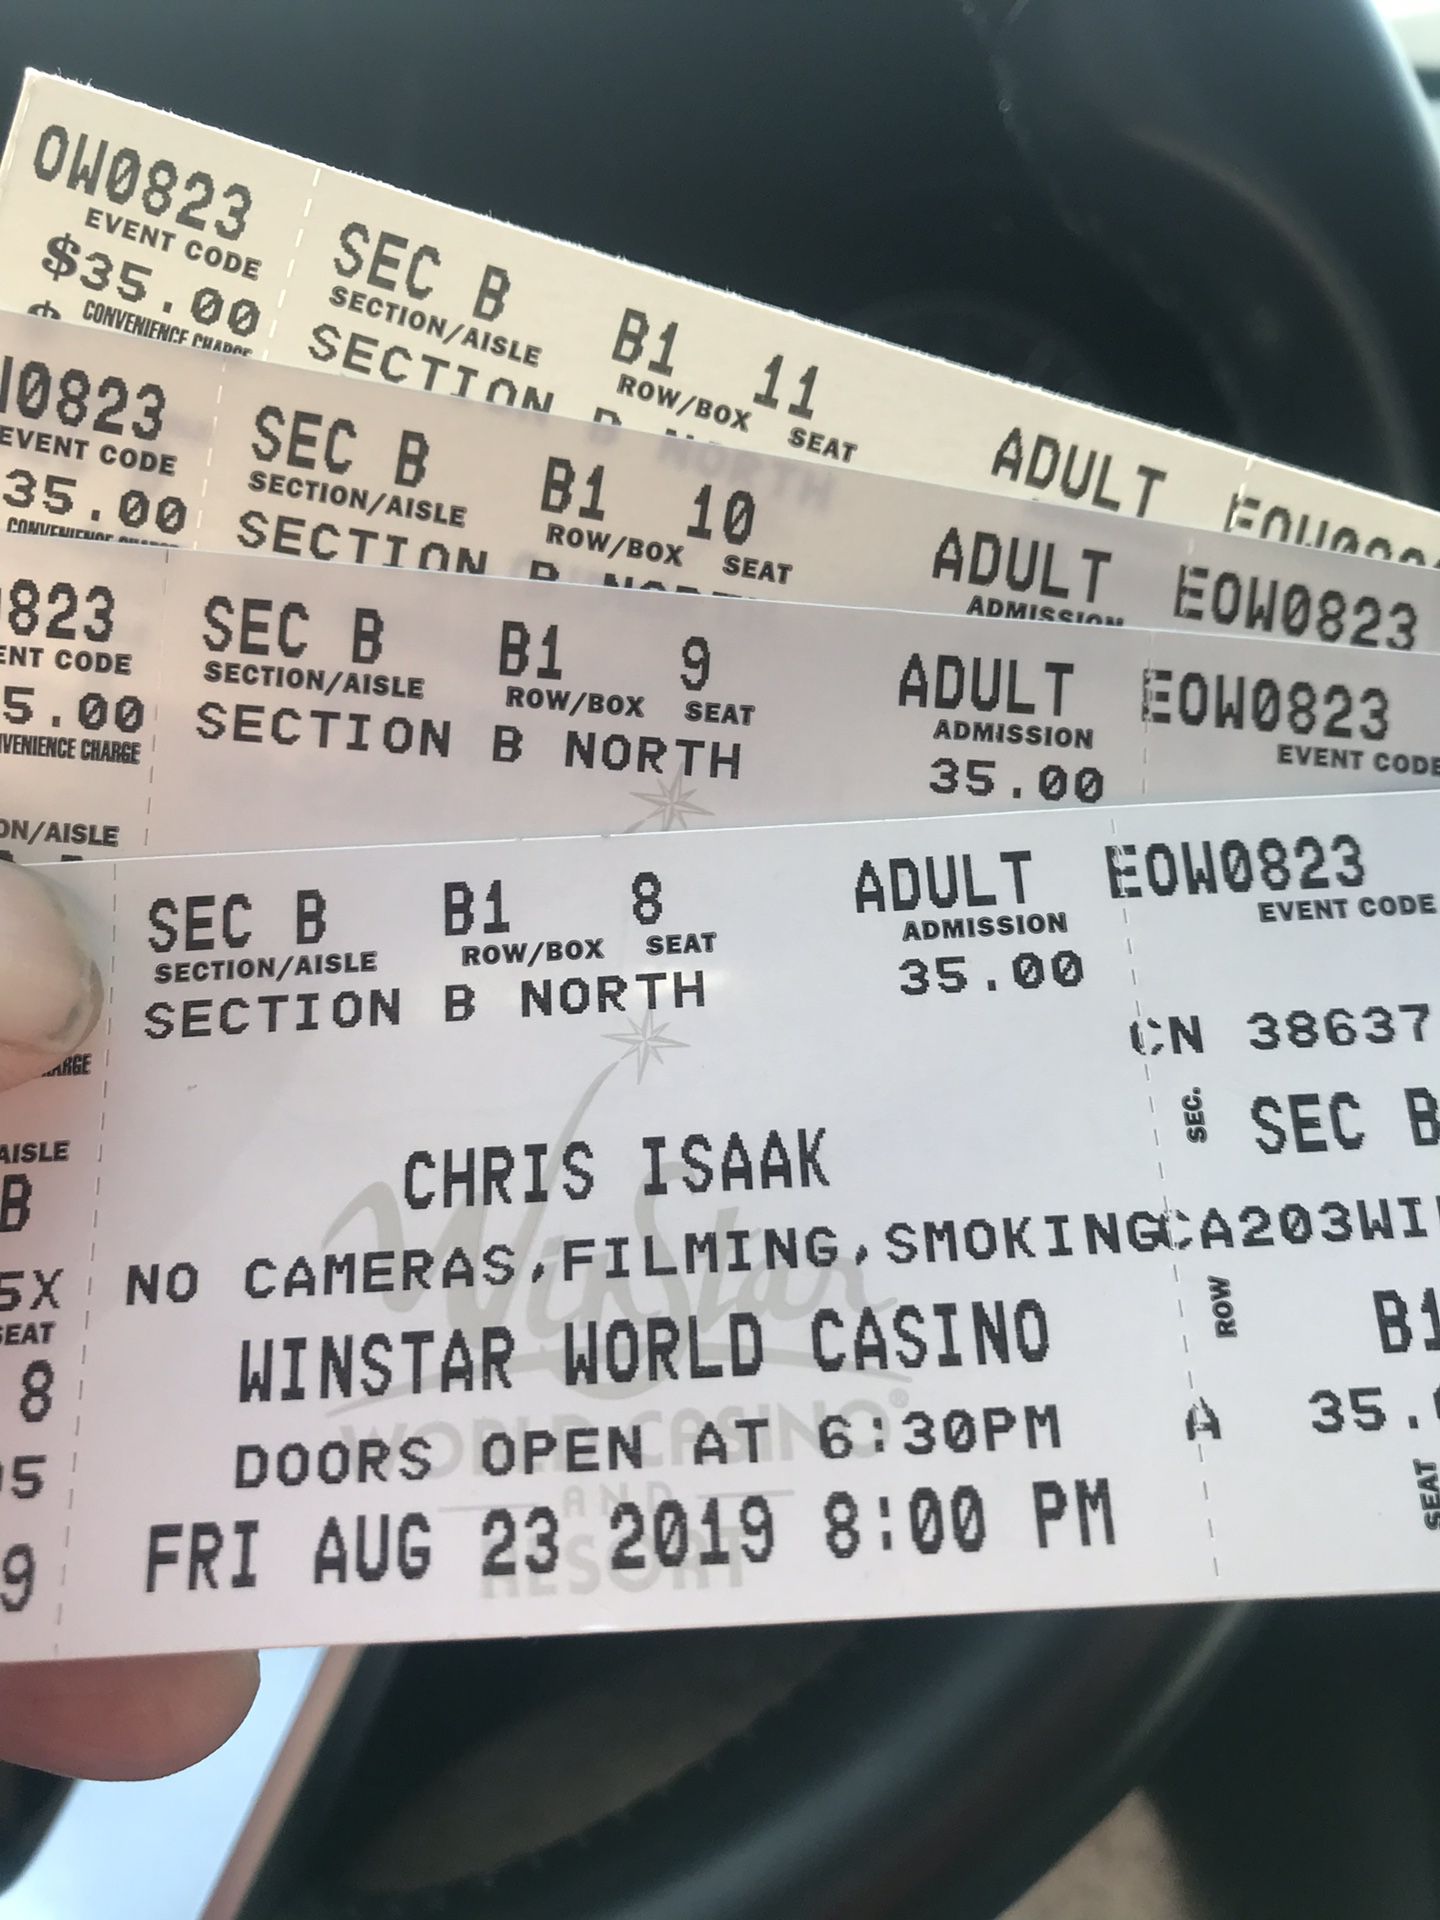 Winstar casino concert tickets for Tonight $10 each